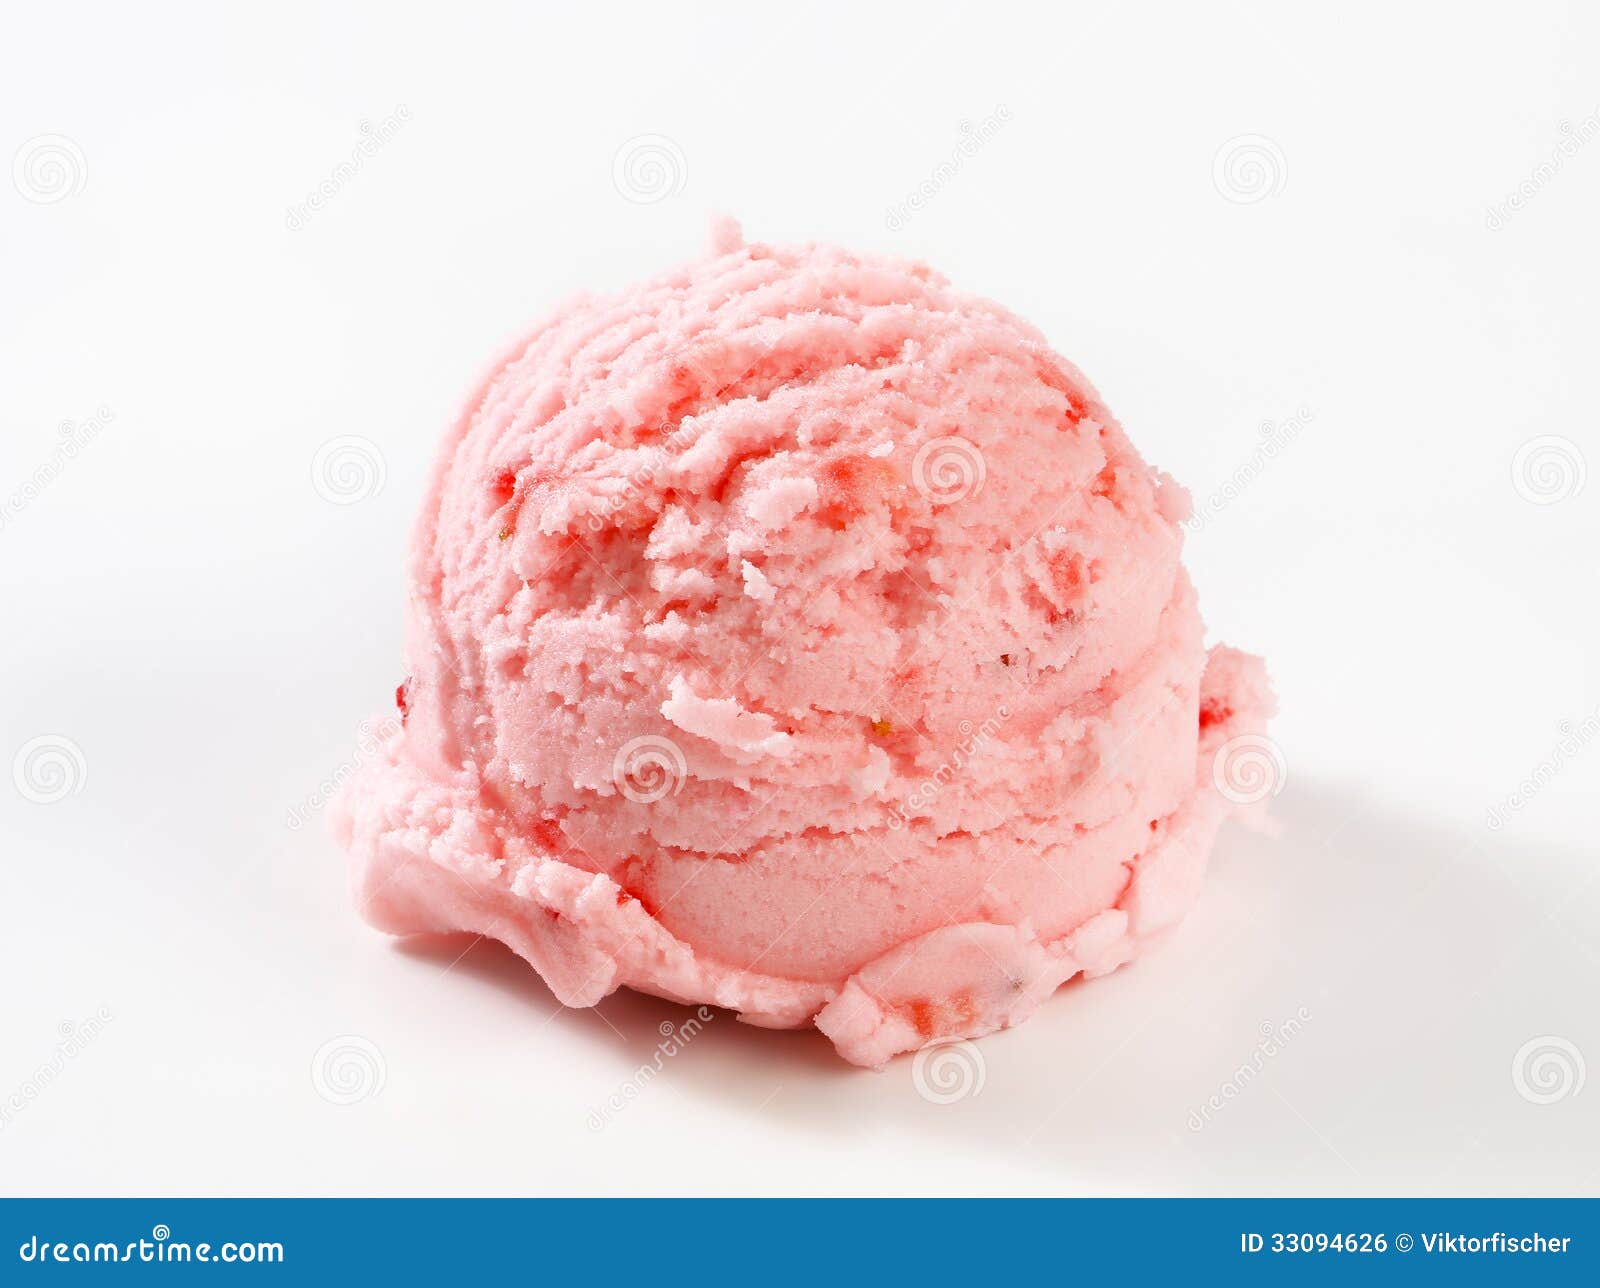 scoop of pink ice cream